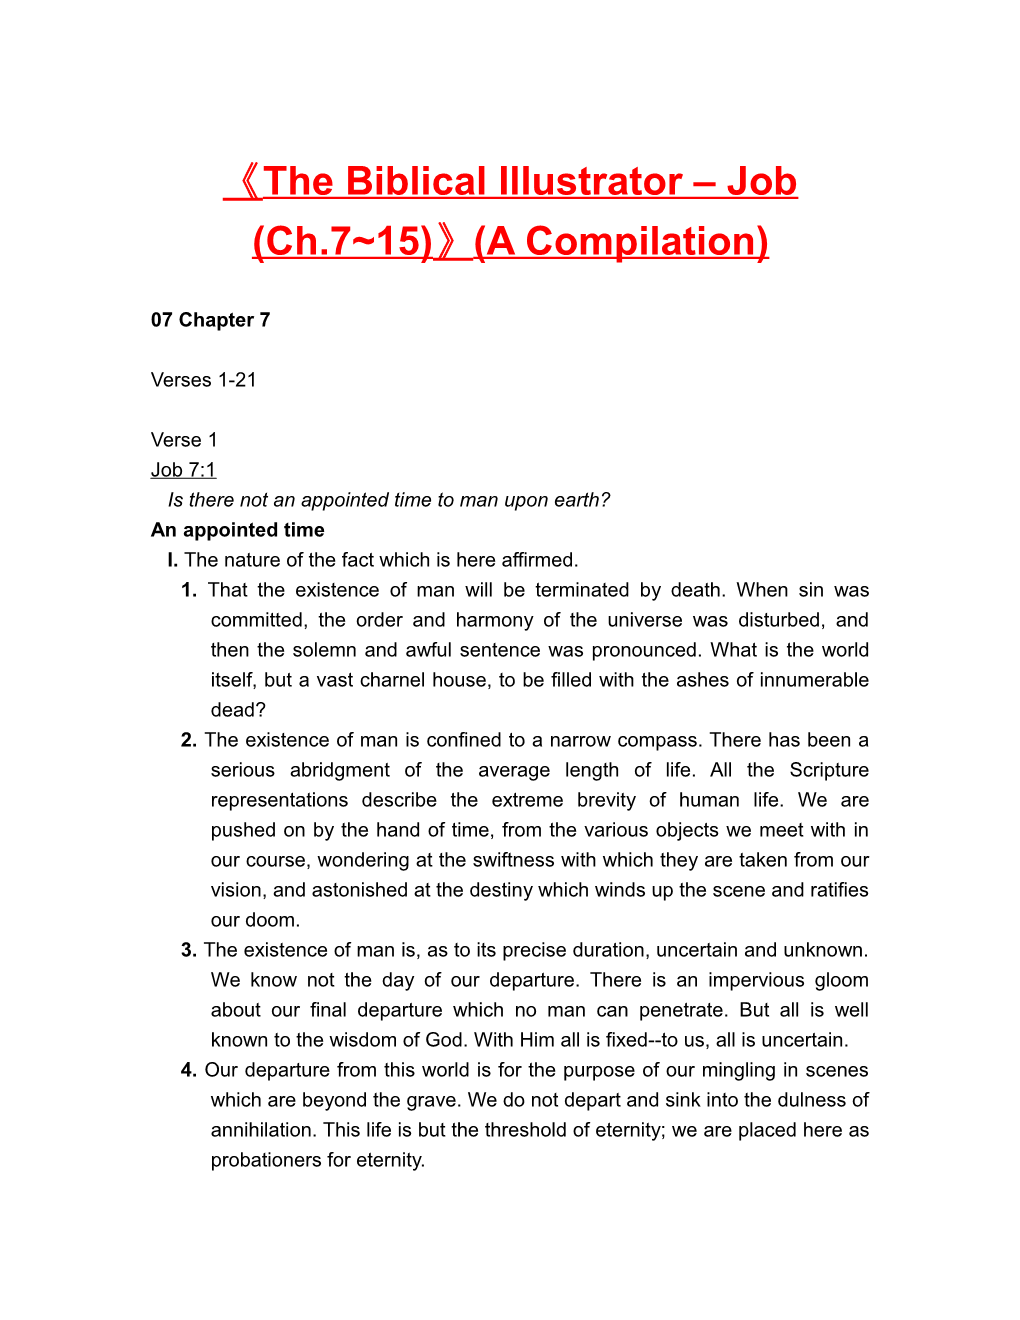 The Biblical Illustrator Job (Ch.7 15) (A Compilation)